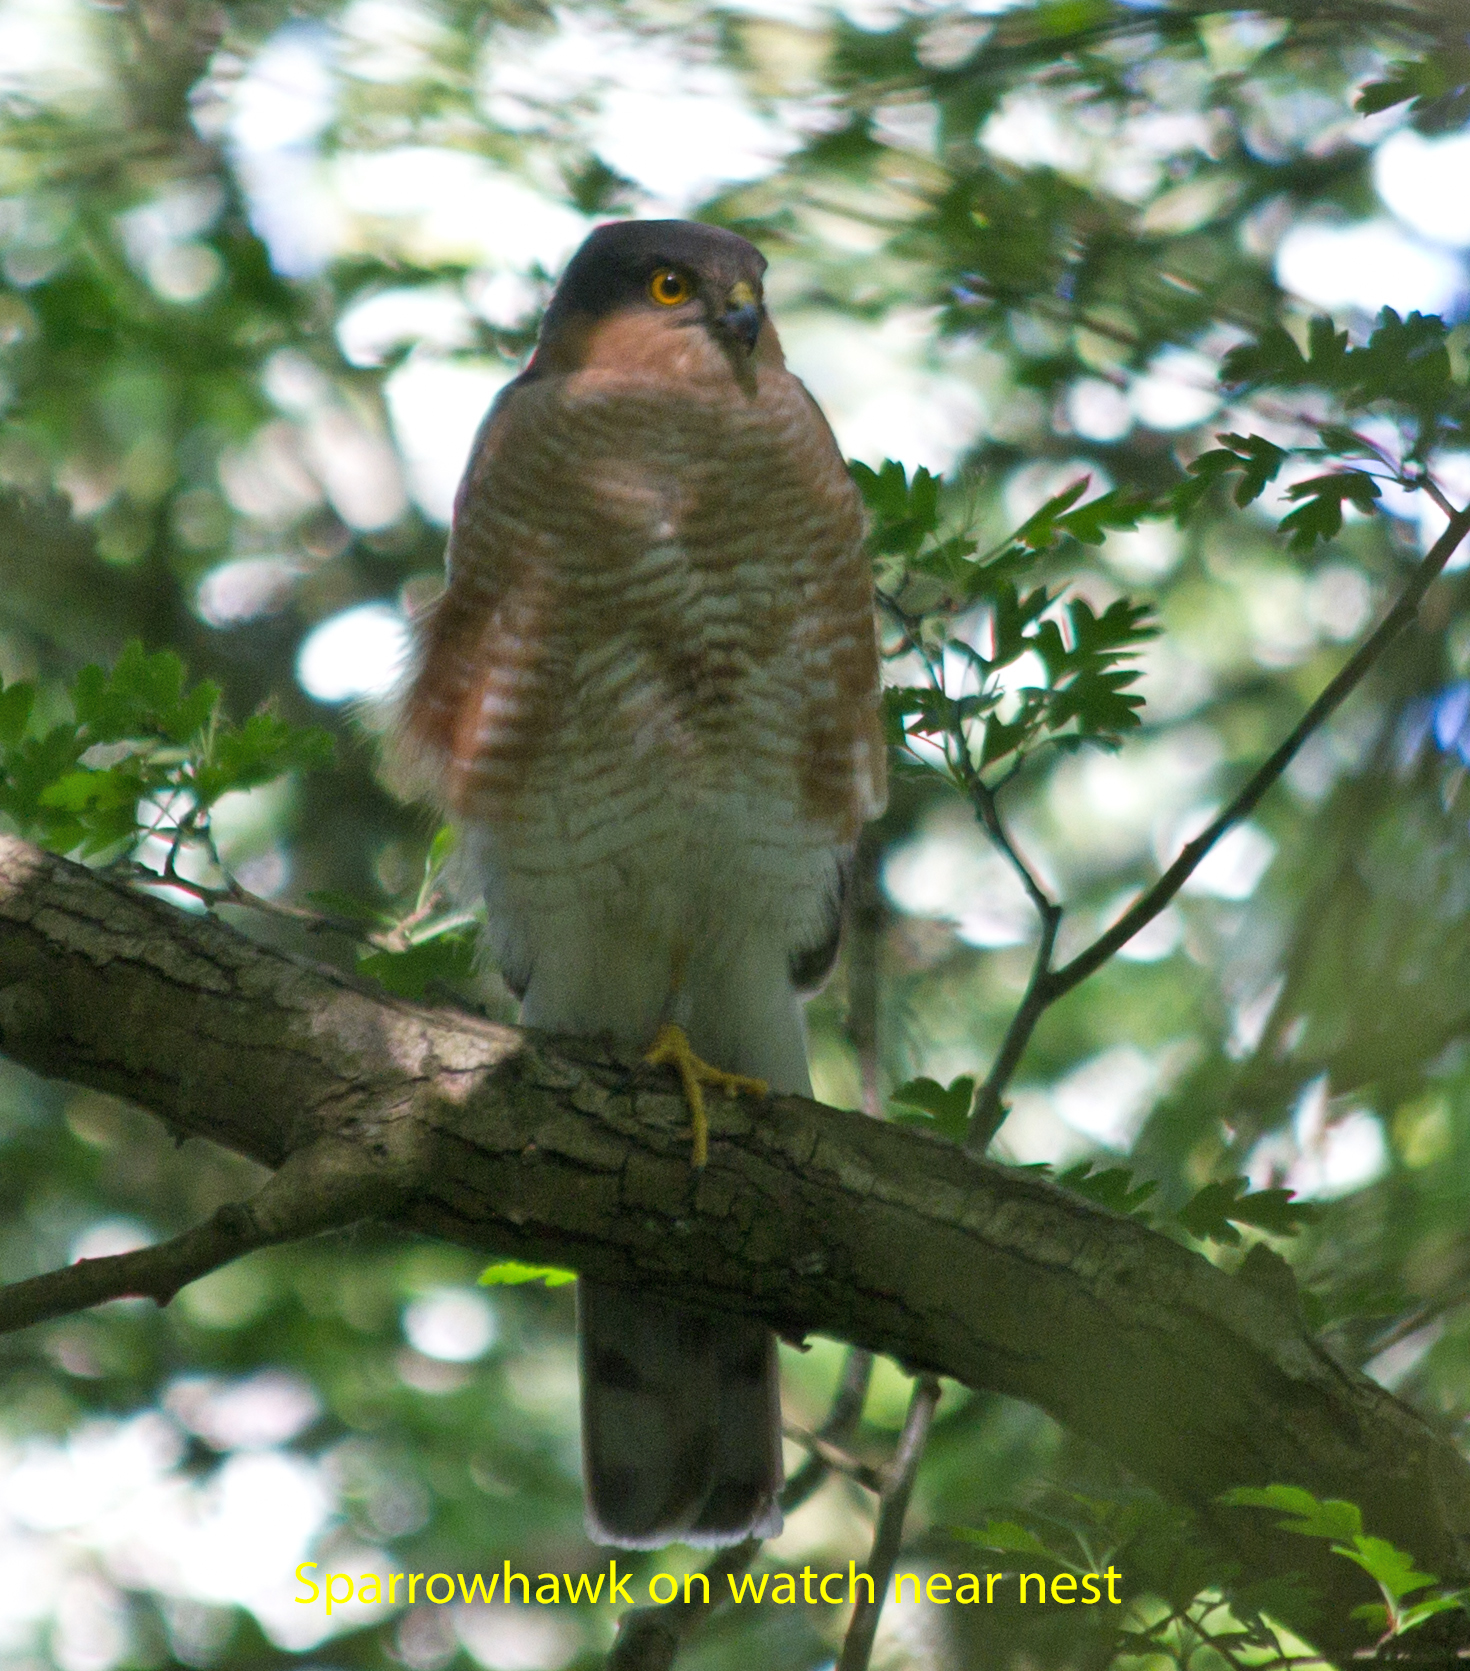 013-male-sparrow-hawk-on-watch-near-nest-1-1-7d77c0734b5d79154243c96a22324f65e03db725